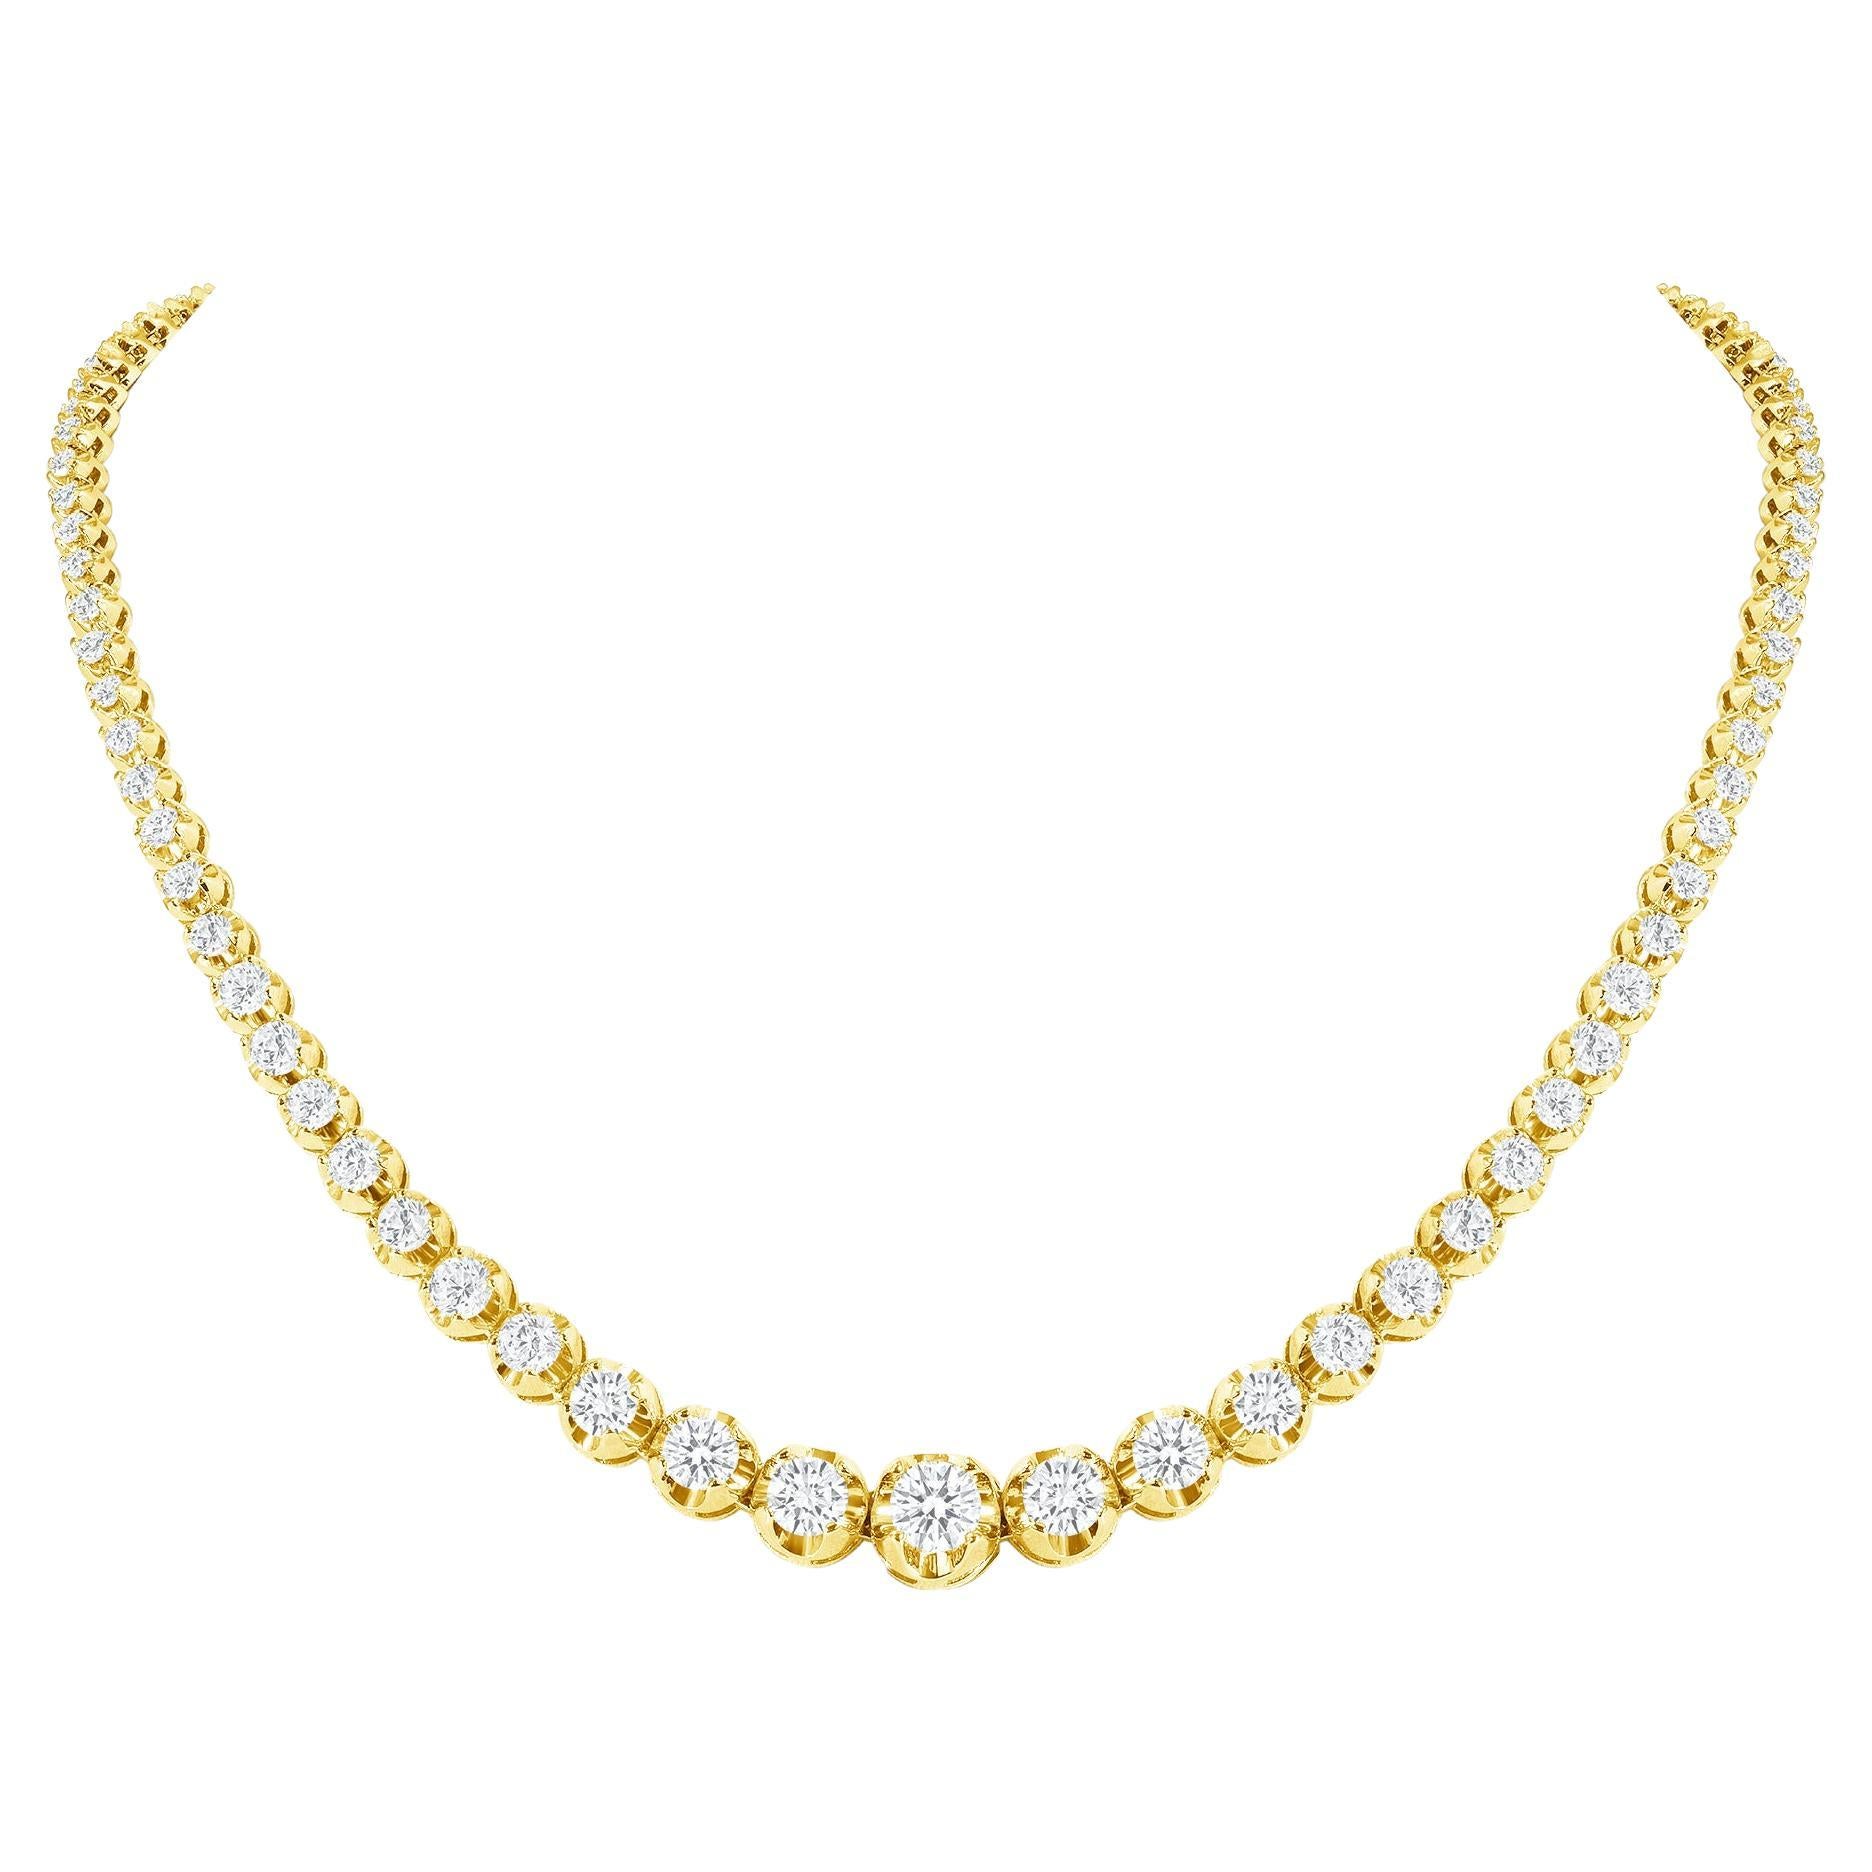 14k Yellow Gold 10 Carat Graduated Diamond Tennis Necklace Illusion Setting